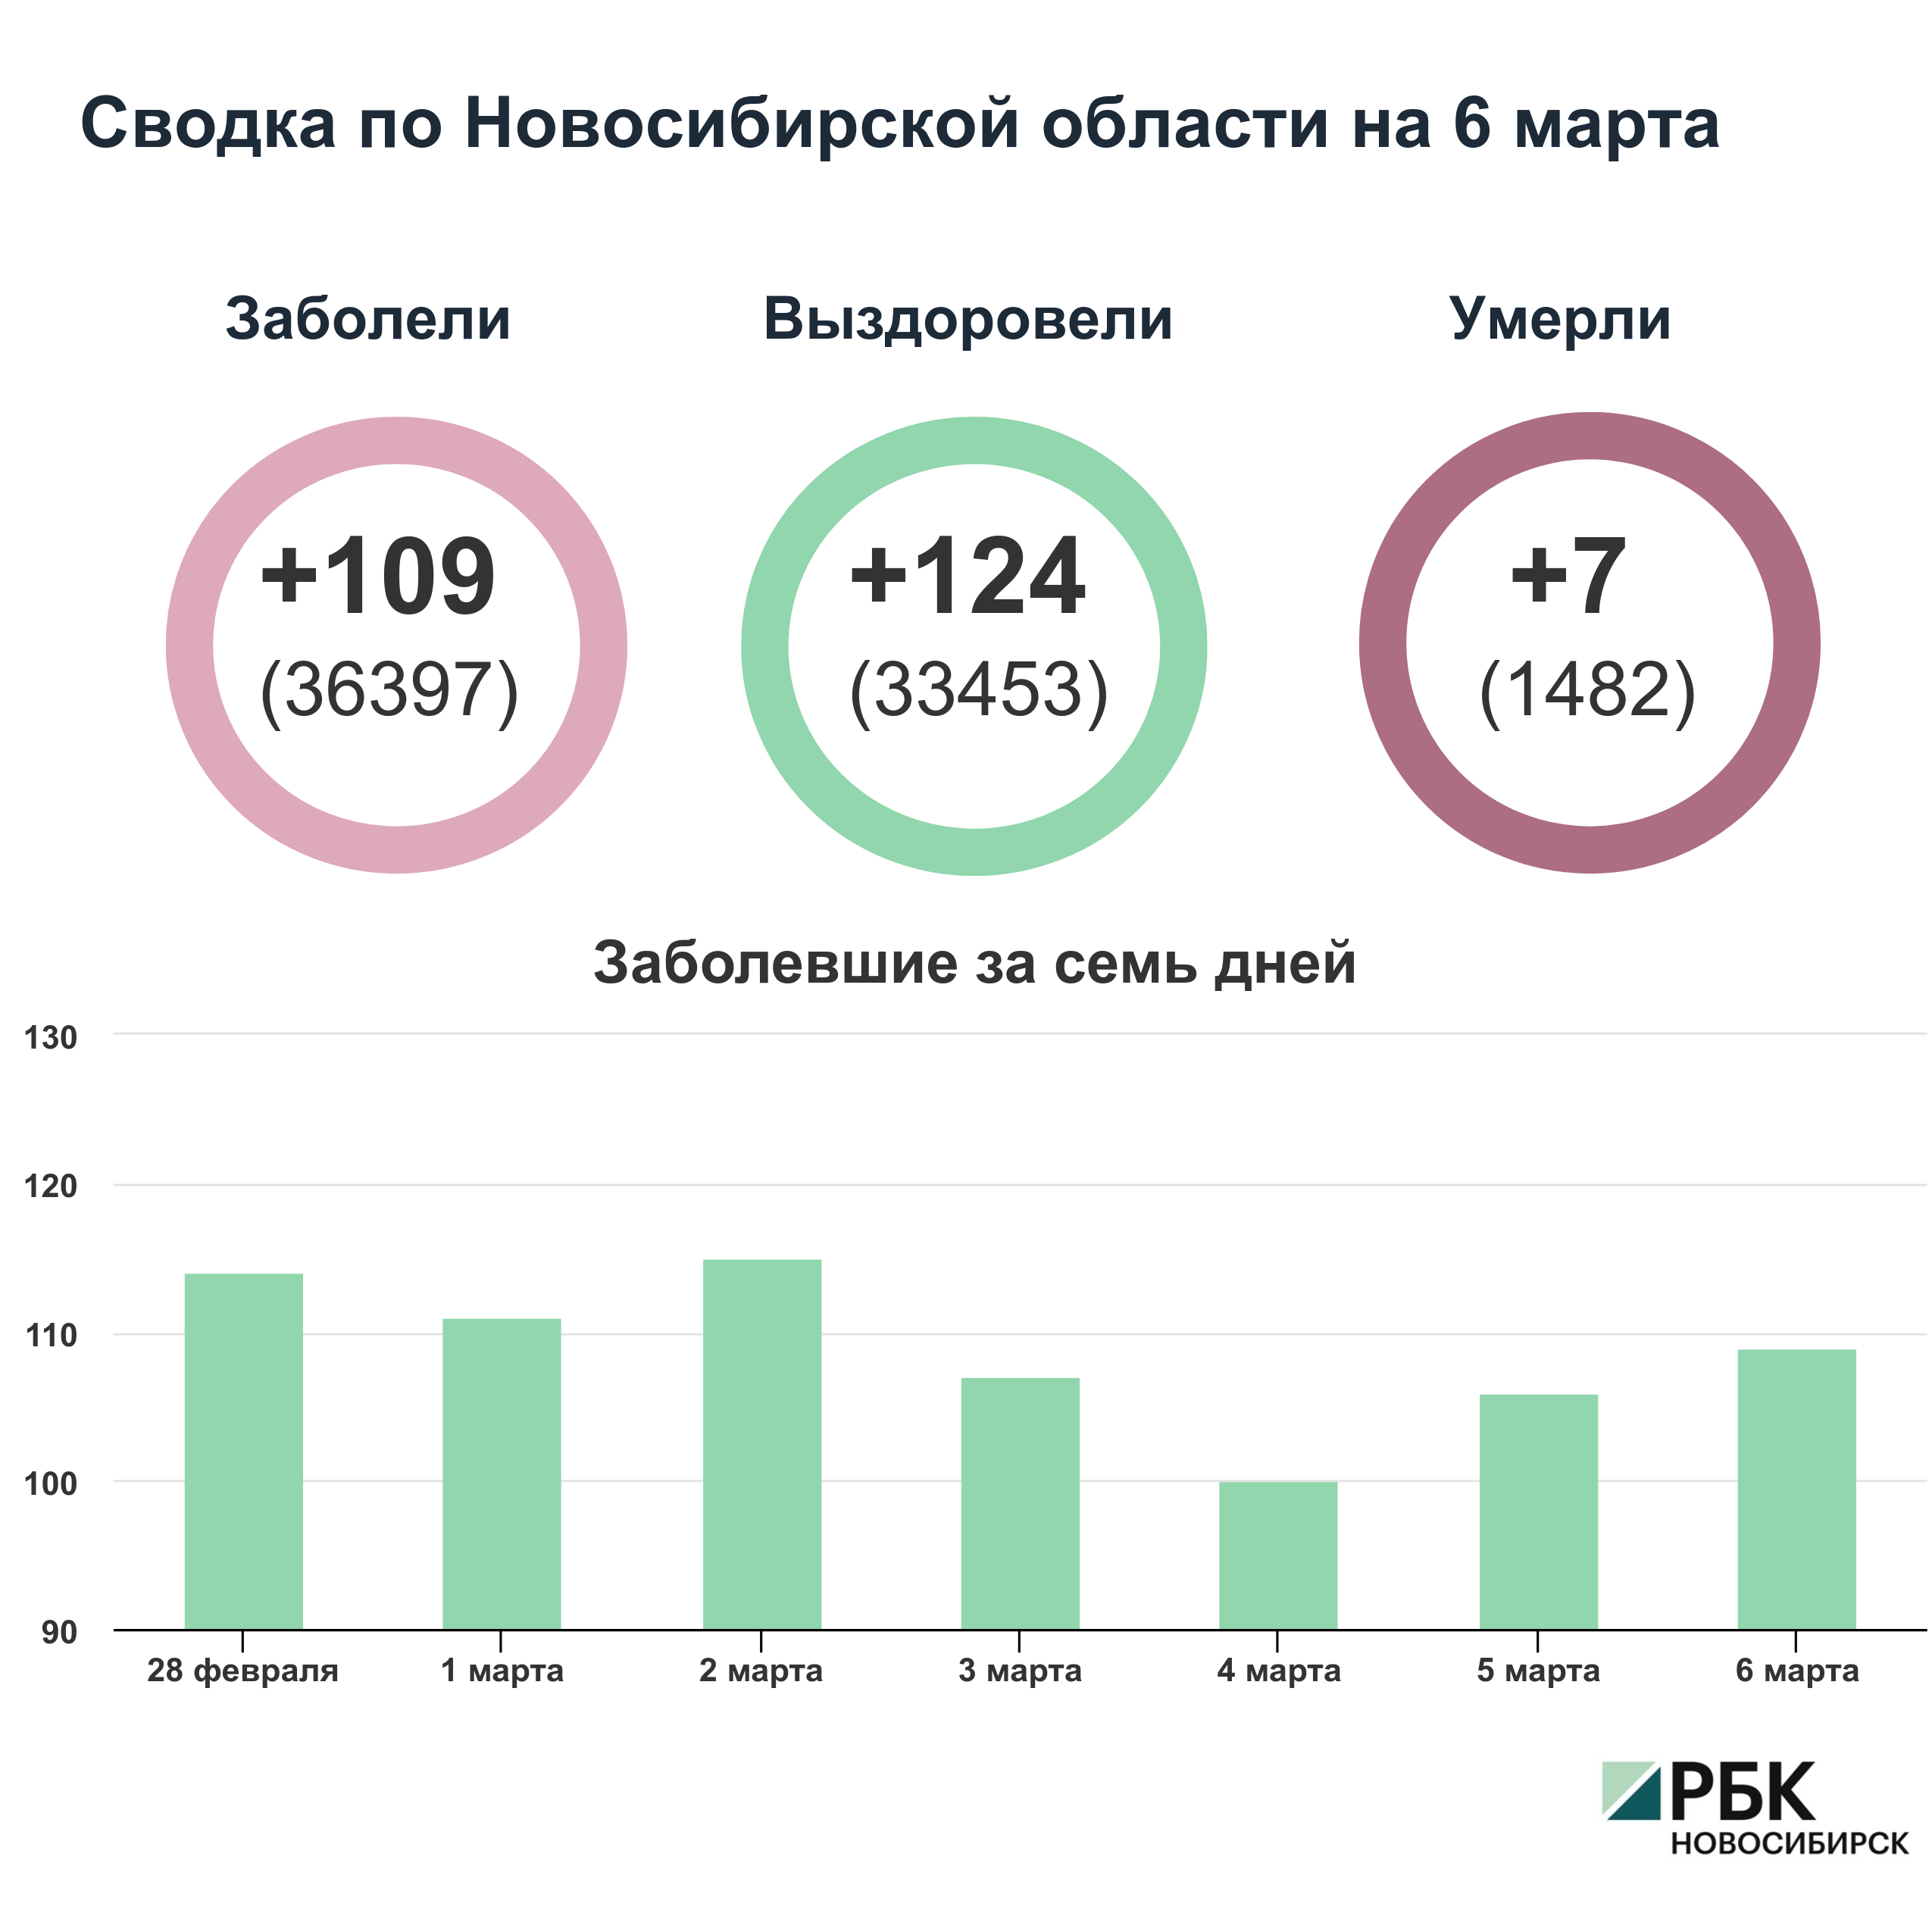 Коронавирус в Новосибирске: сводка на 6 марта